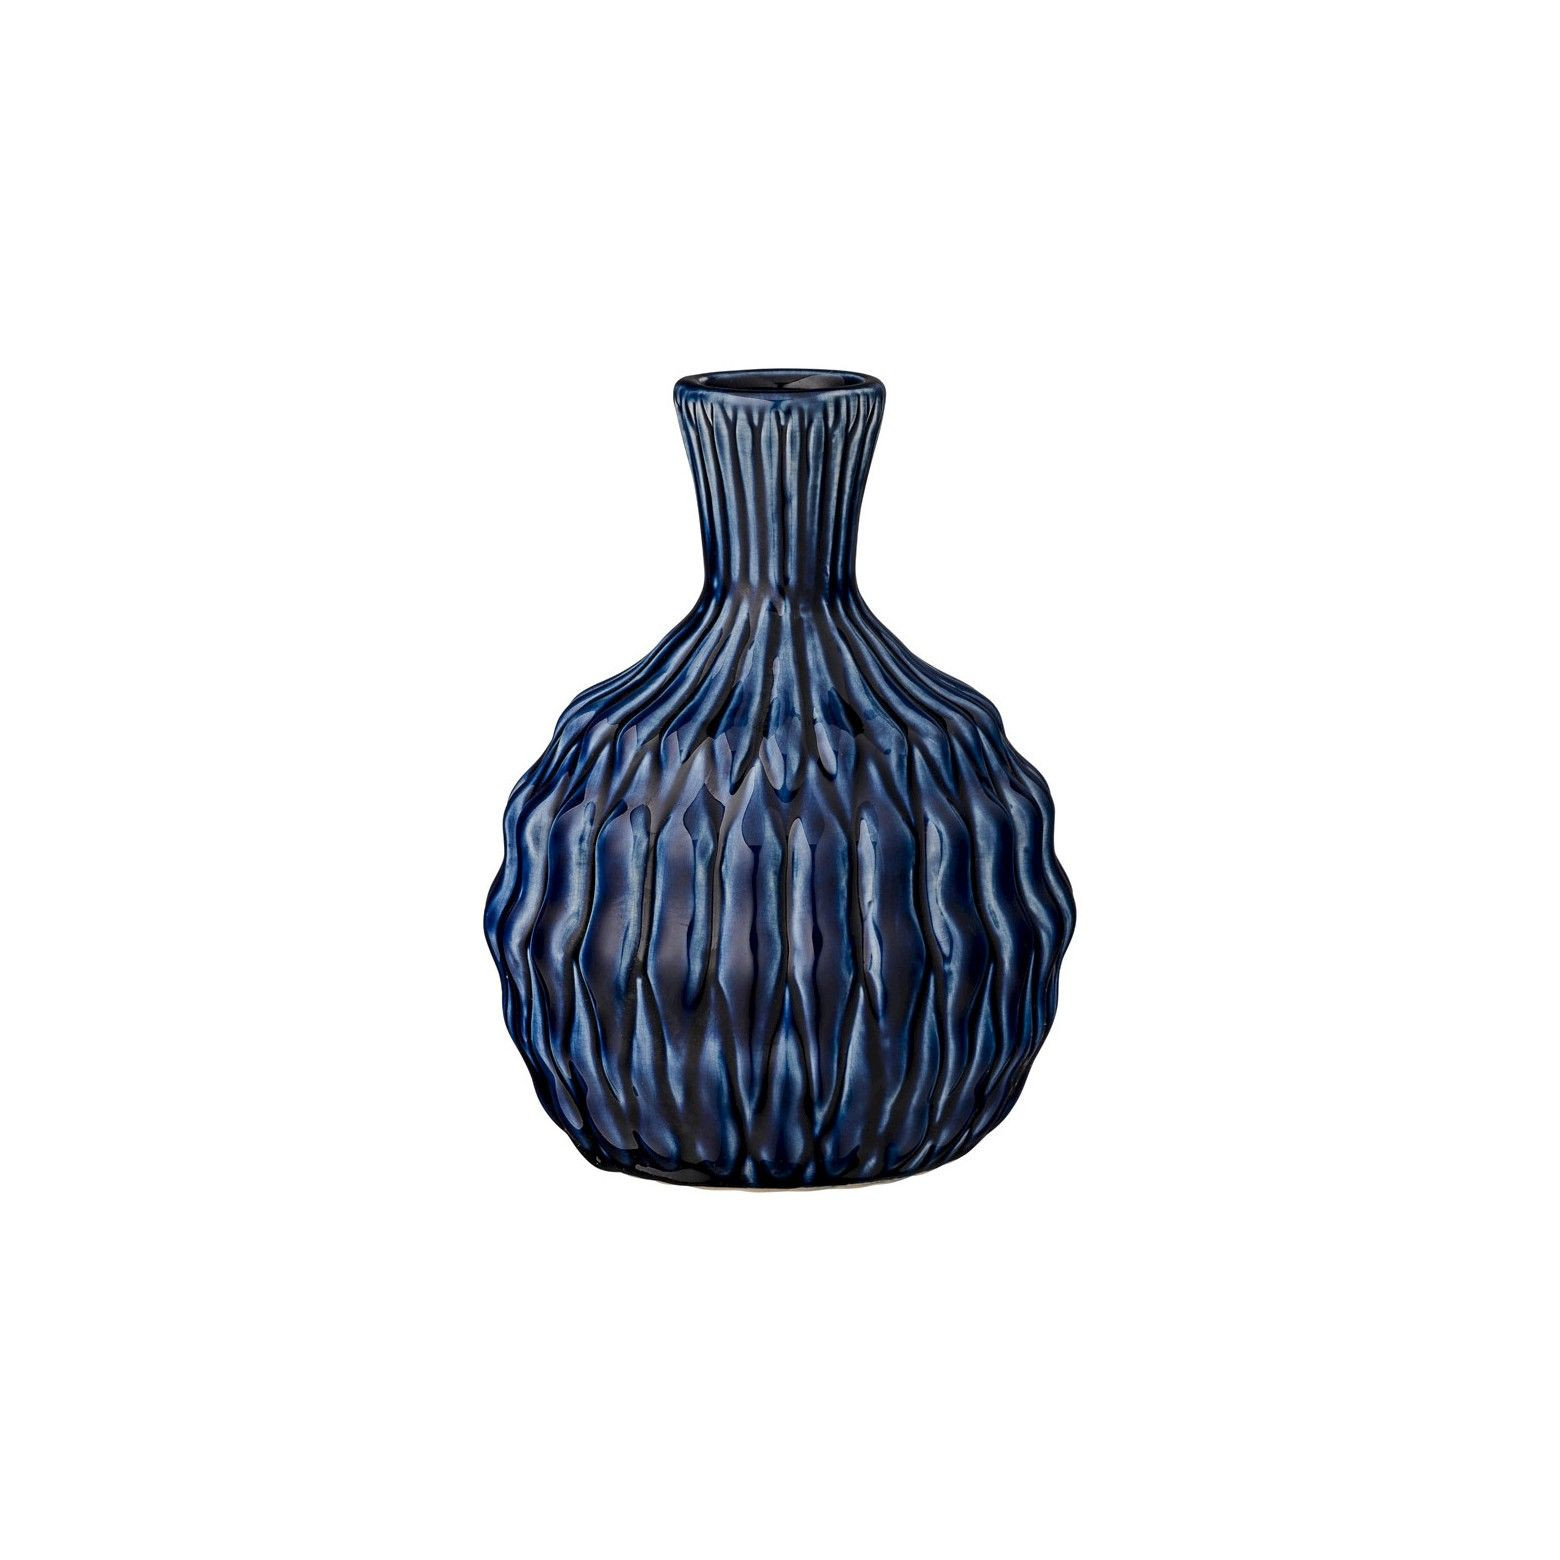 20 Unique Target Blue and White Vase 2024 free download target blue and white vase of ceramic vase navy blue 6 3r studios ceramic vase navy and throughout ceramic vase navy blue 6 3r studios